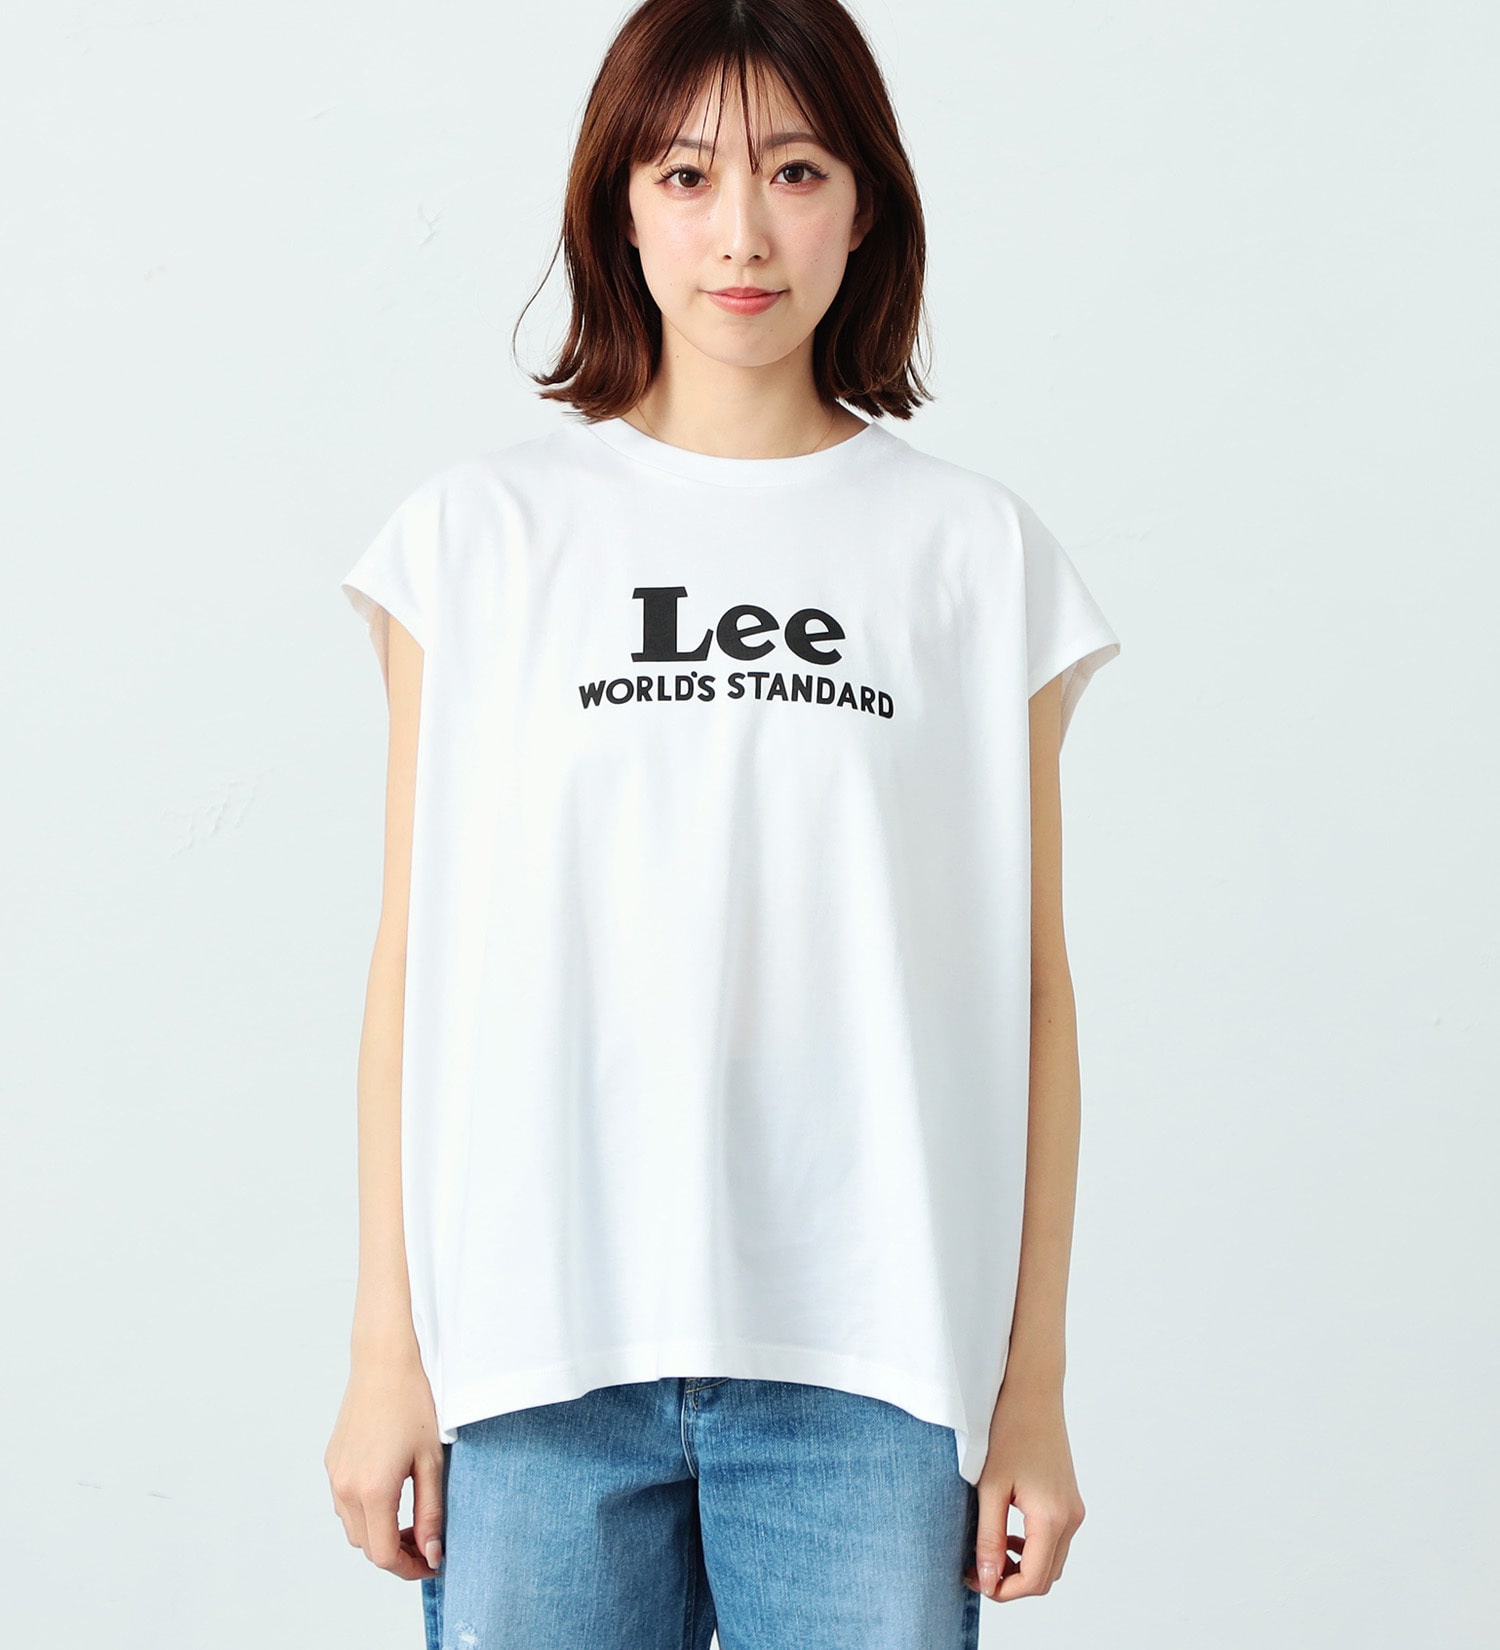 Lee(リー)のプリント ノースリーブTee|トップス/Tシャツ/カットソー/レディース|ホワイト